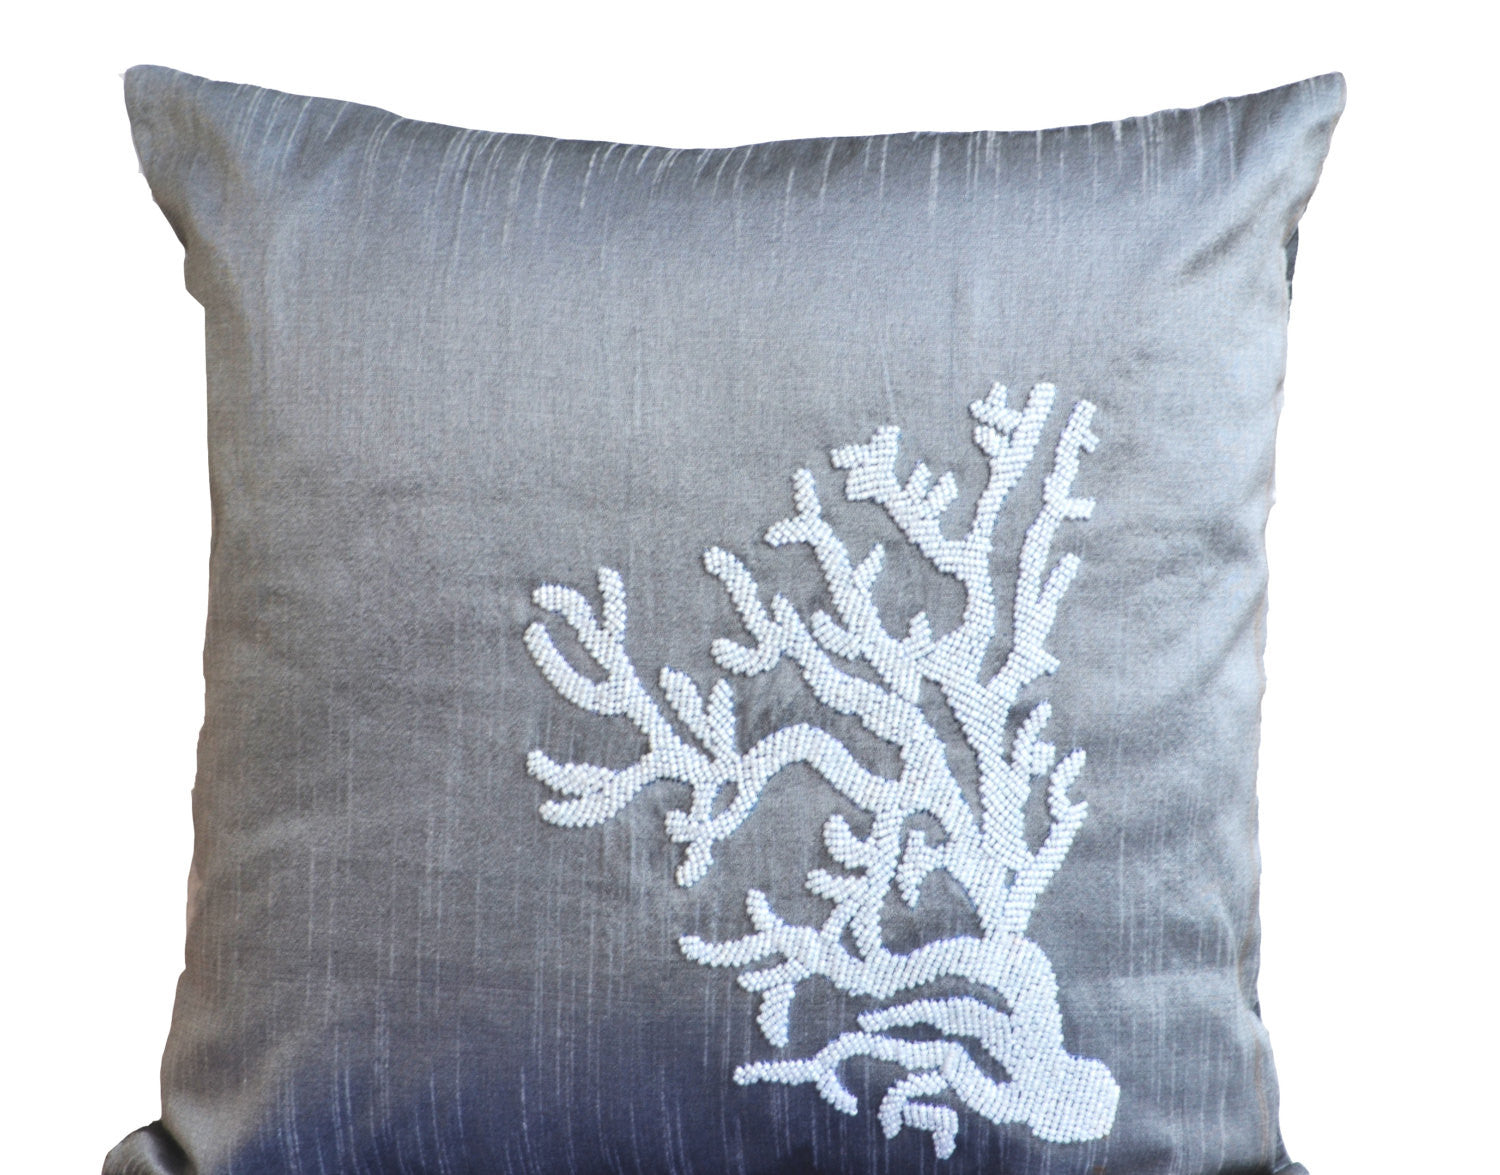 Handmade nautical themed gray pillow with beads